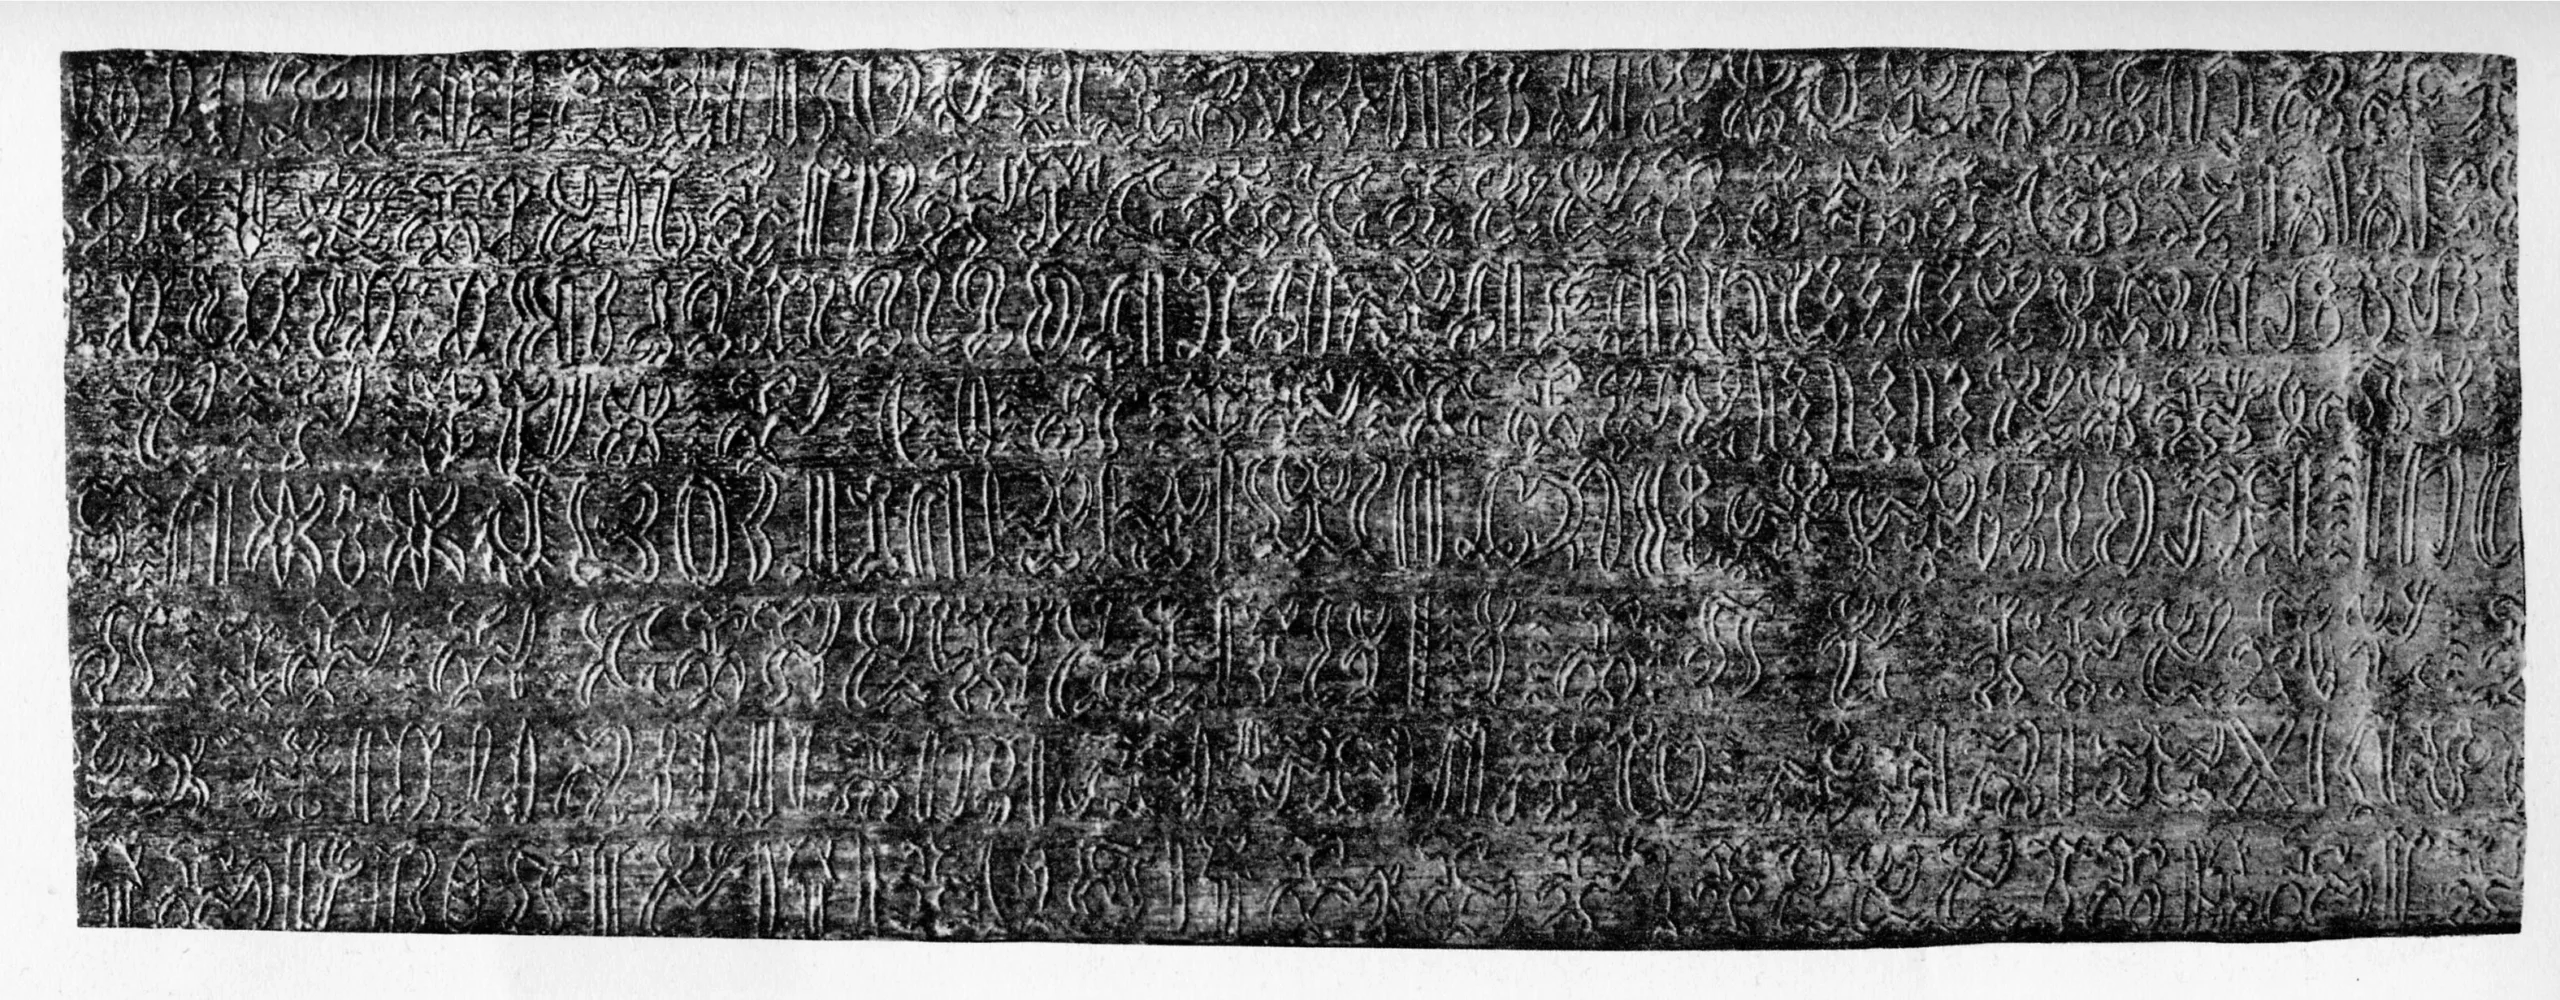 Rongorongo Writings On Wooden Tablets